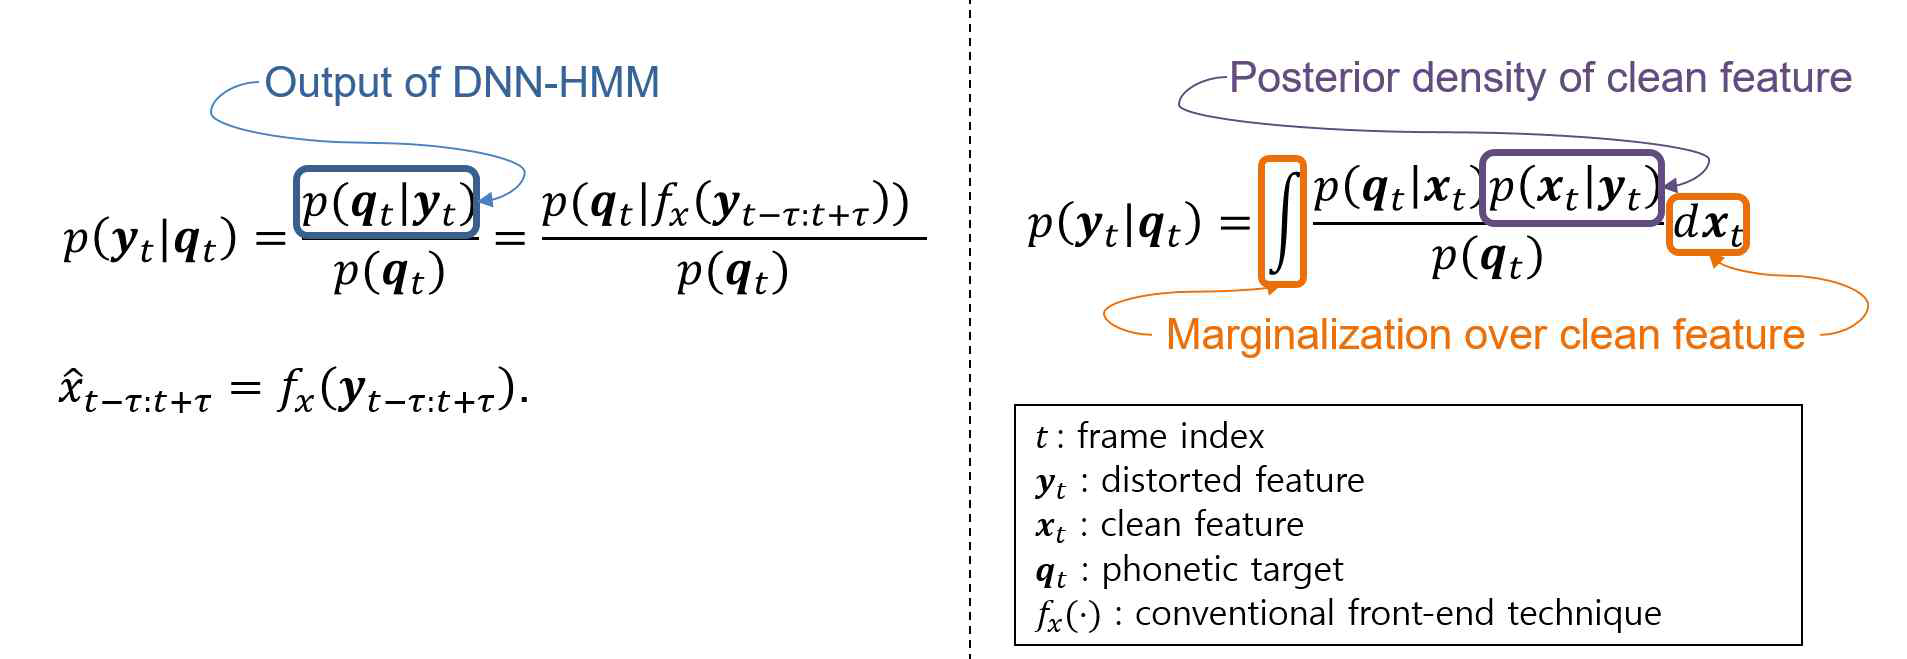 Uncertainty decoding (우)과 기존 전처리 알고리즘 (좌)의 formulation 비교